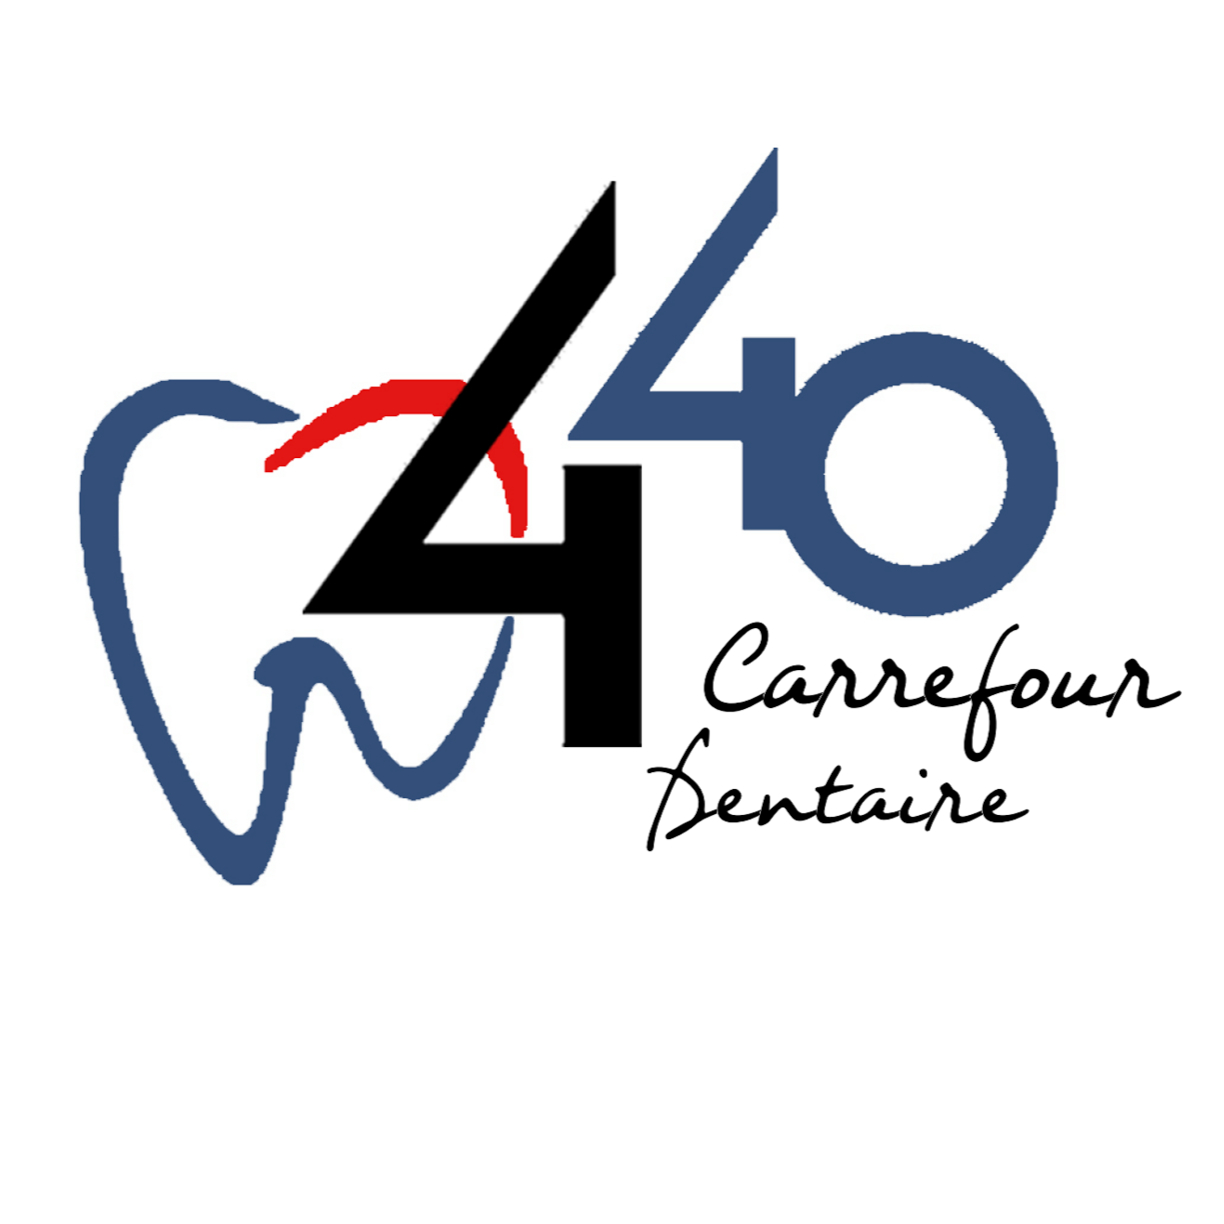 Carrefour Dentaire 440 - Dentiste - Dentists